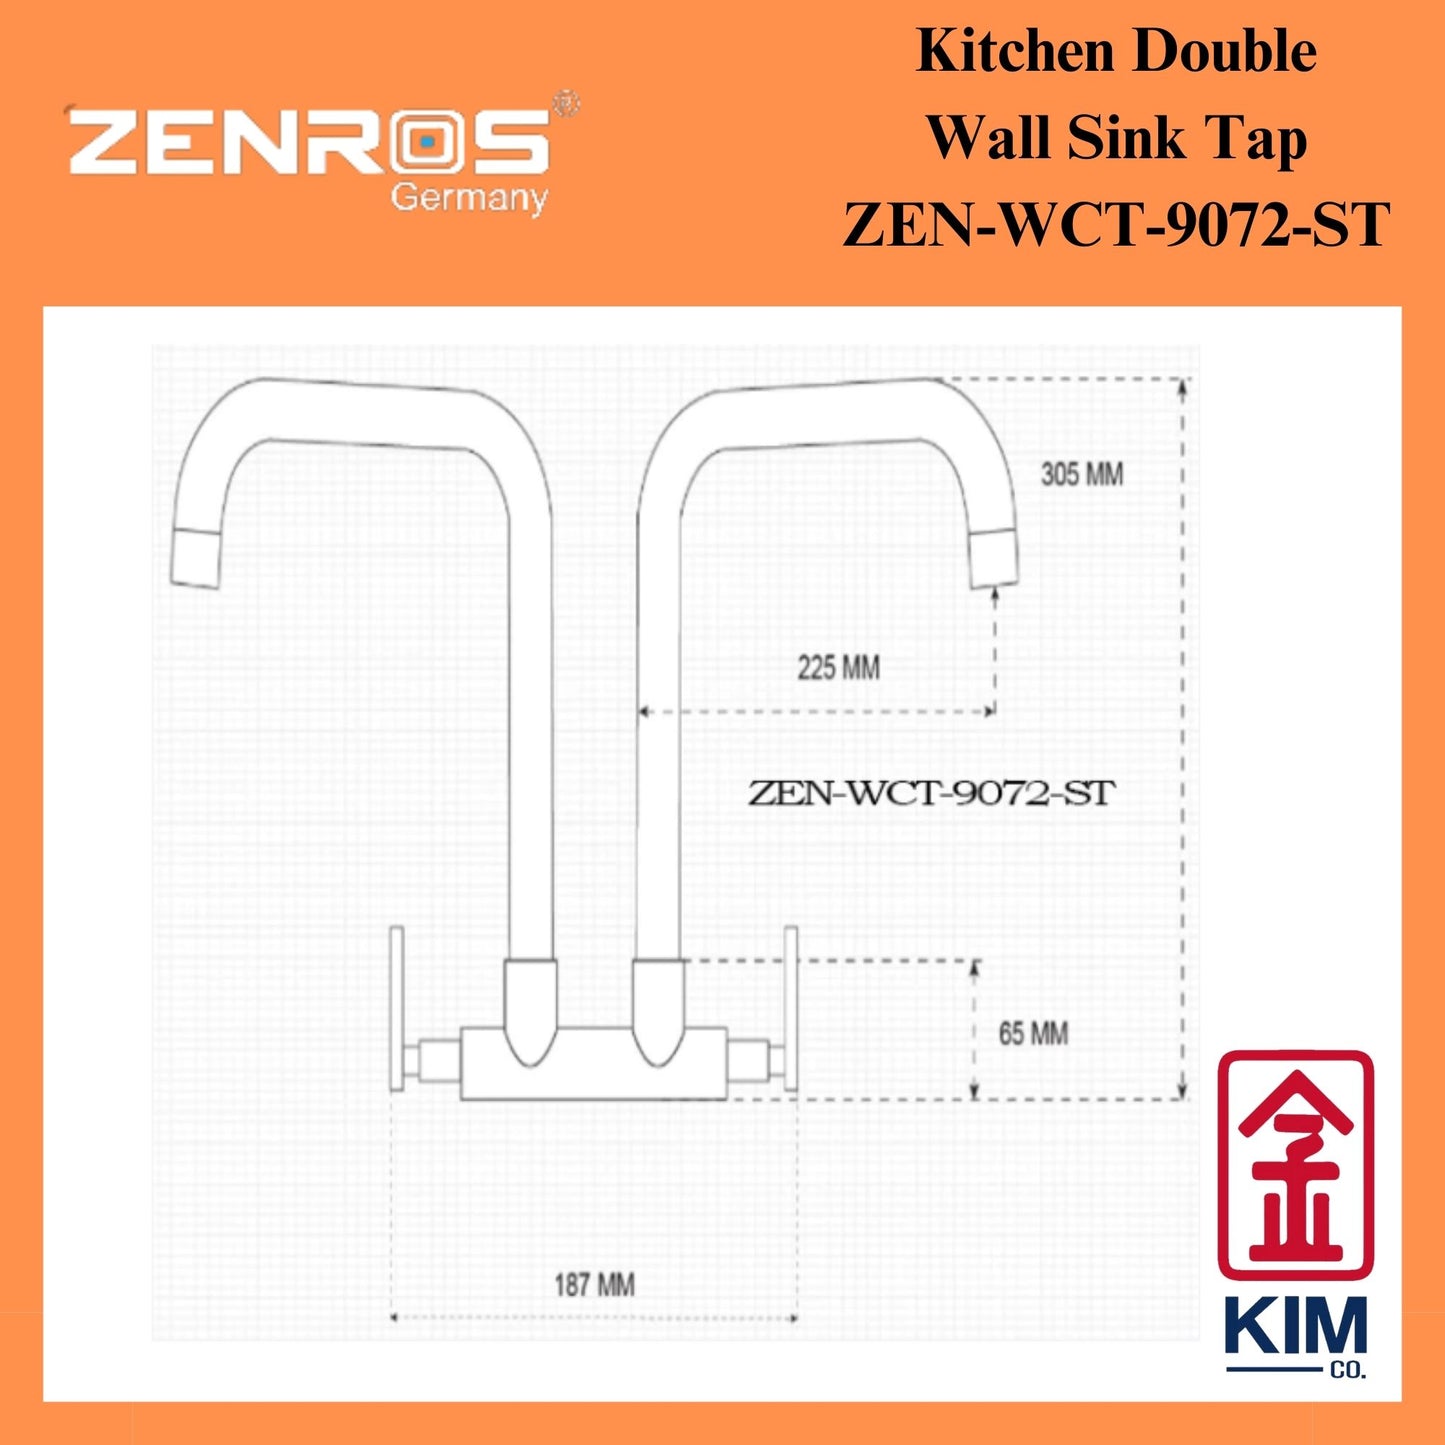 Zenros Wall Mounted Double Kitchen Sink Tap (ZEN-WCT-9072-ST)